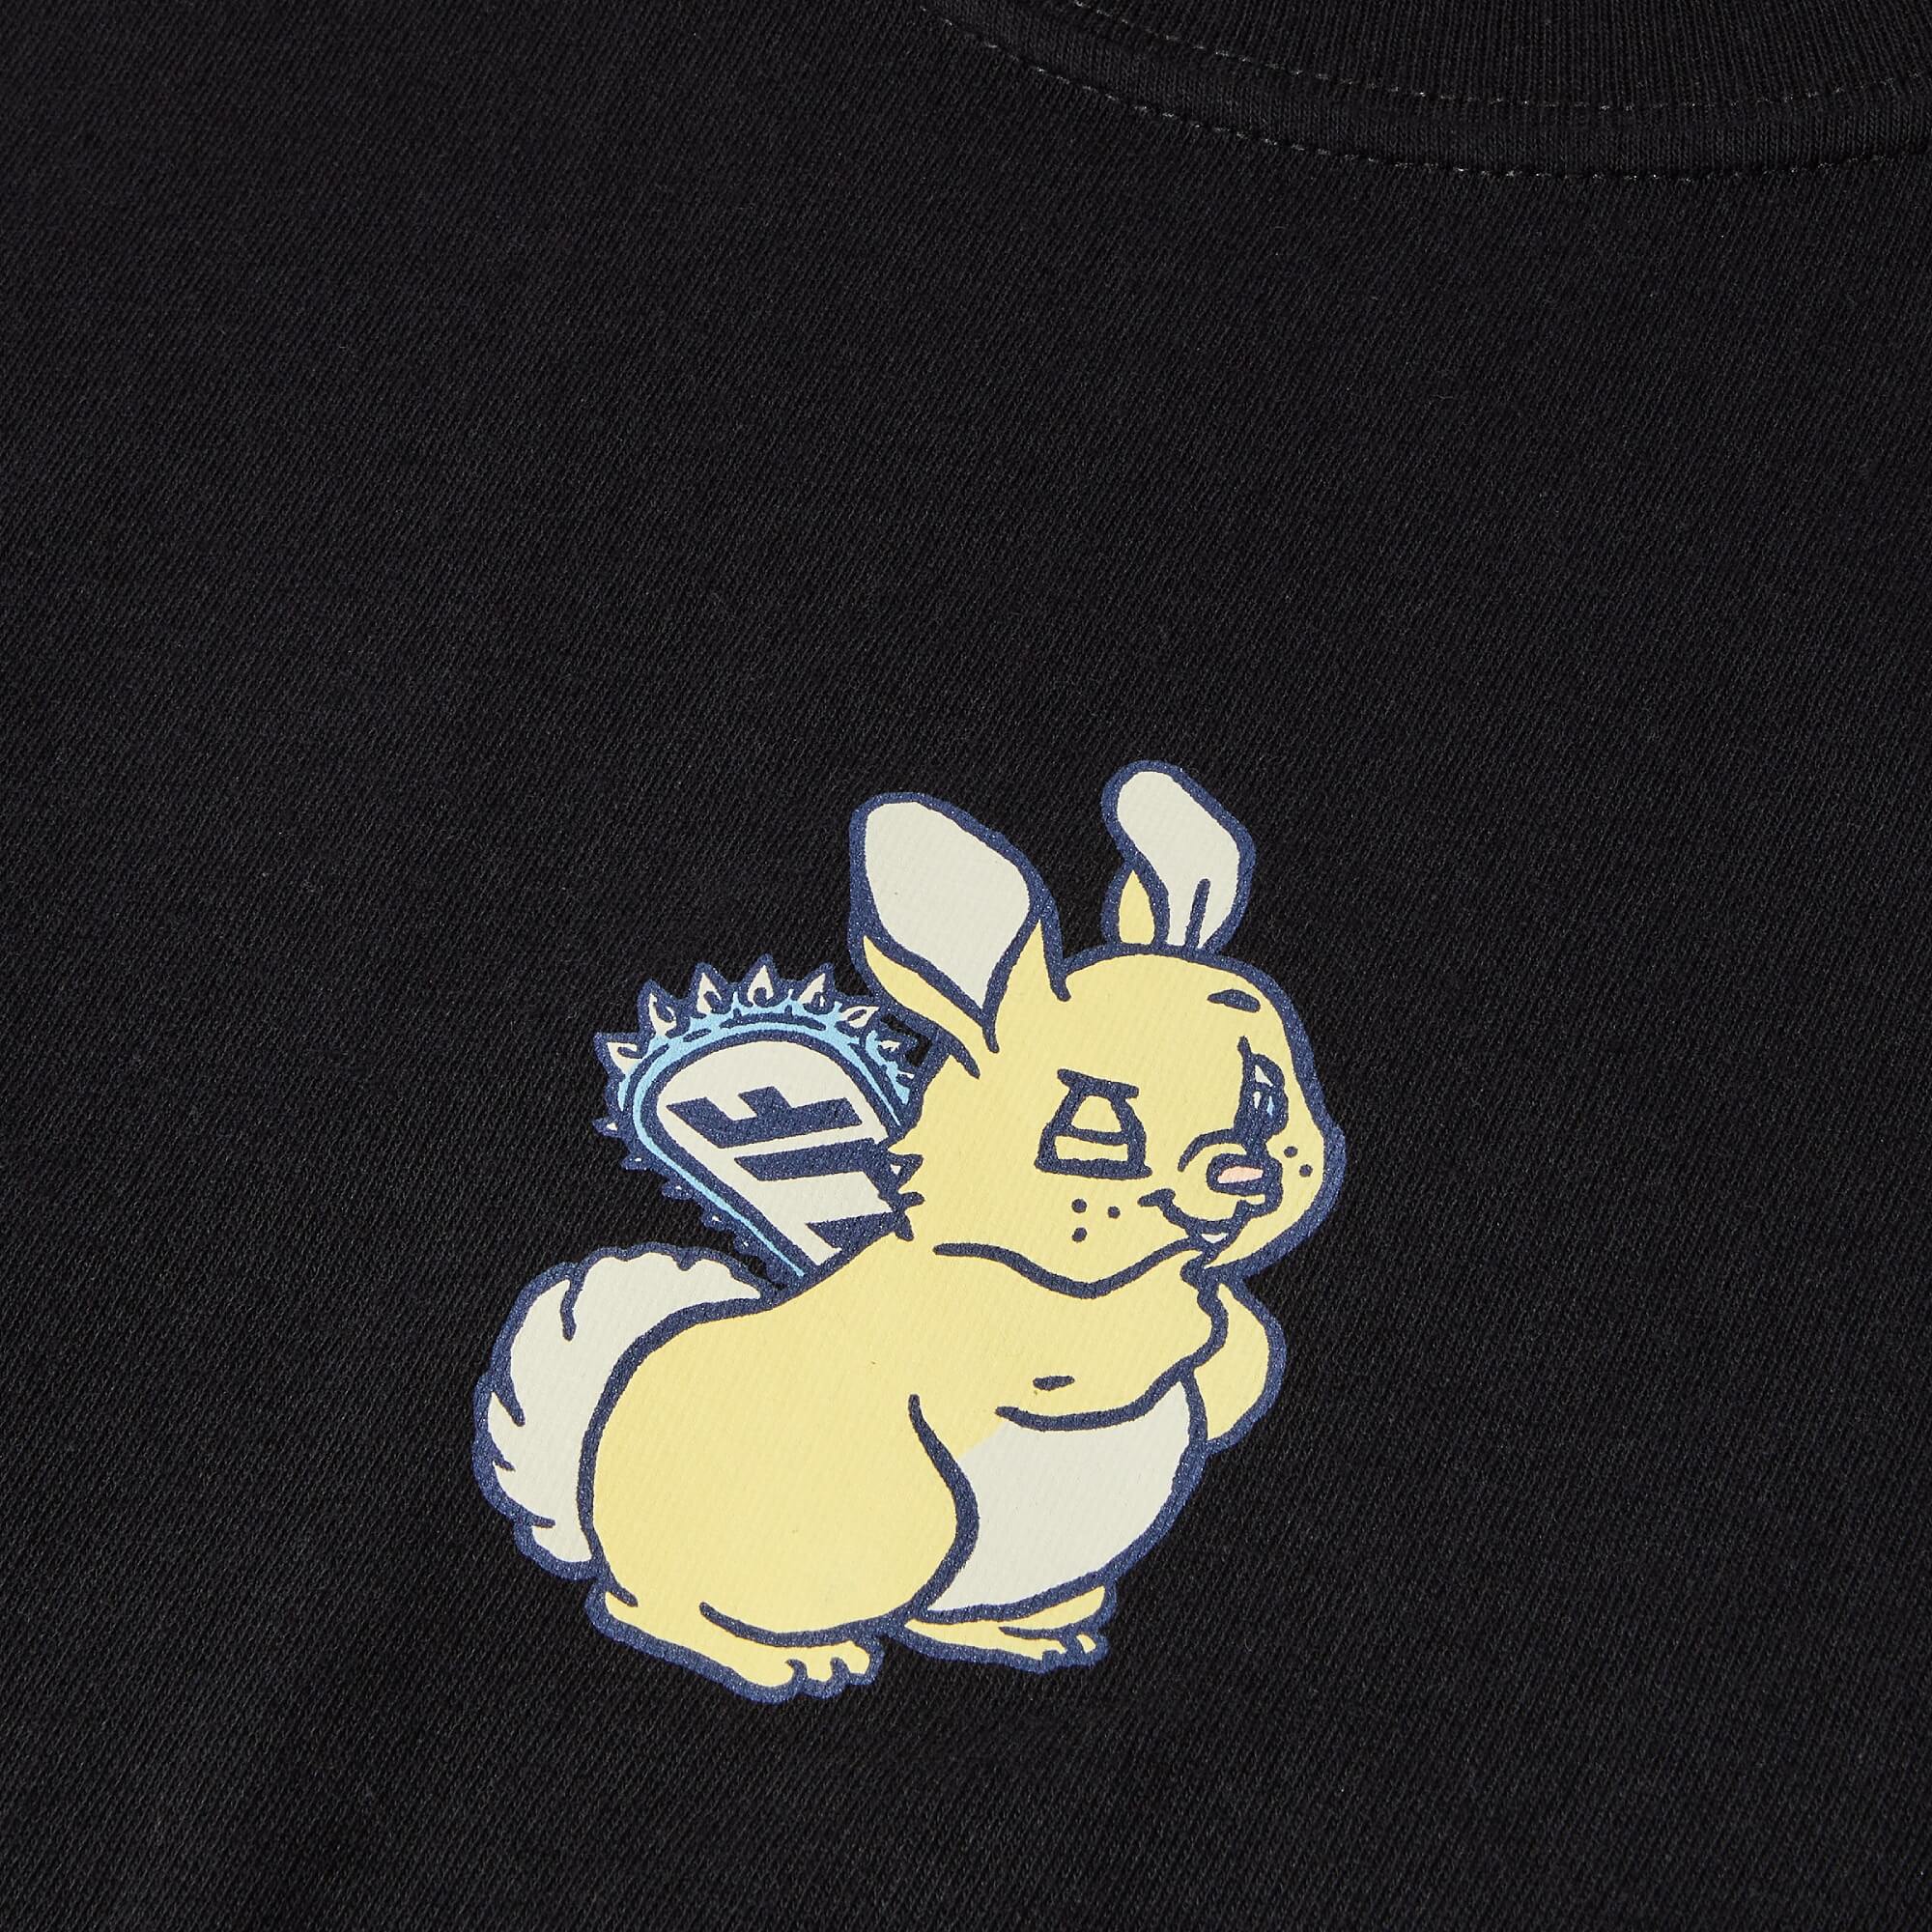 HUF Bad Hare Day Short Sleeve T-Shirt Black